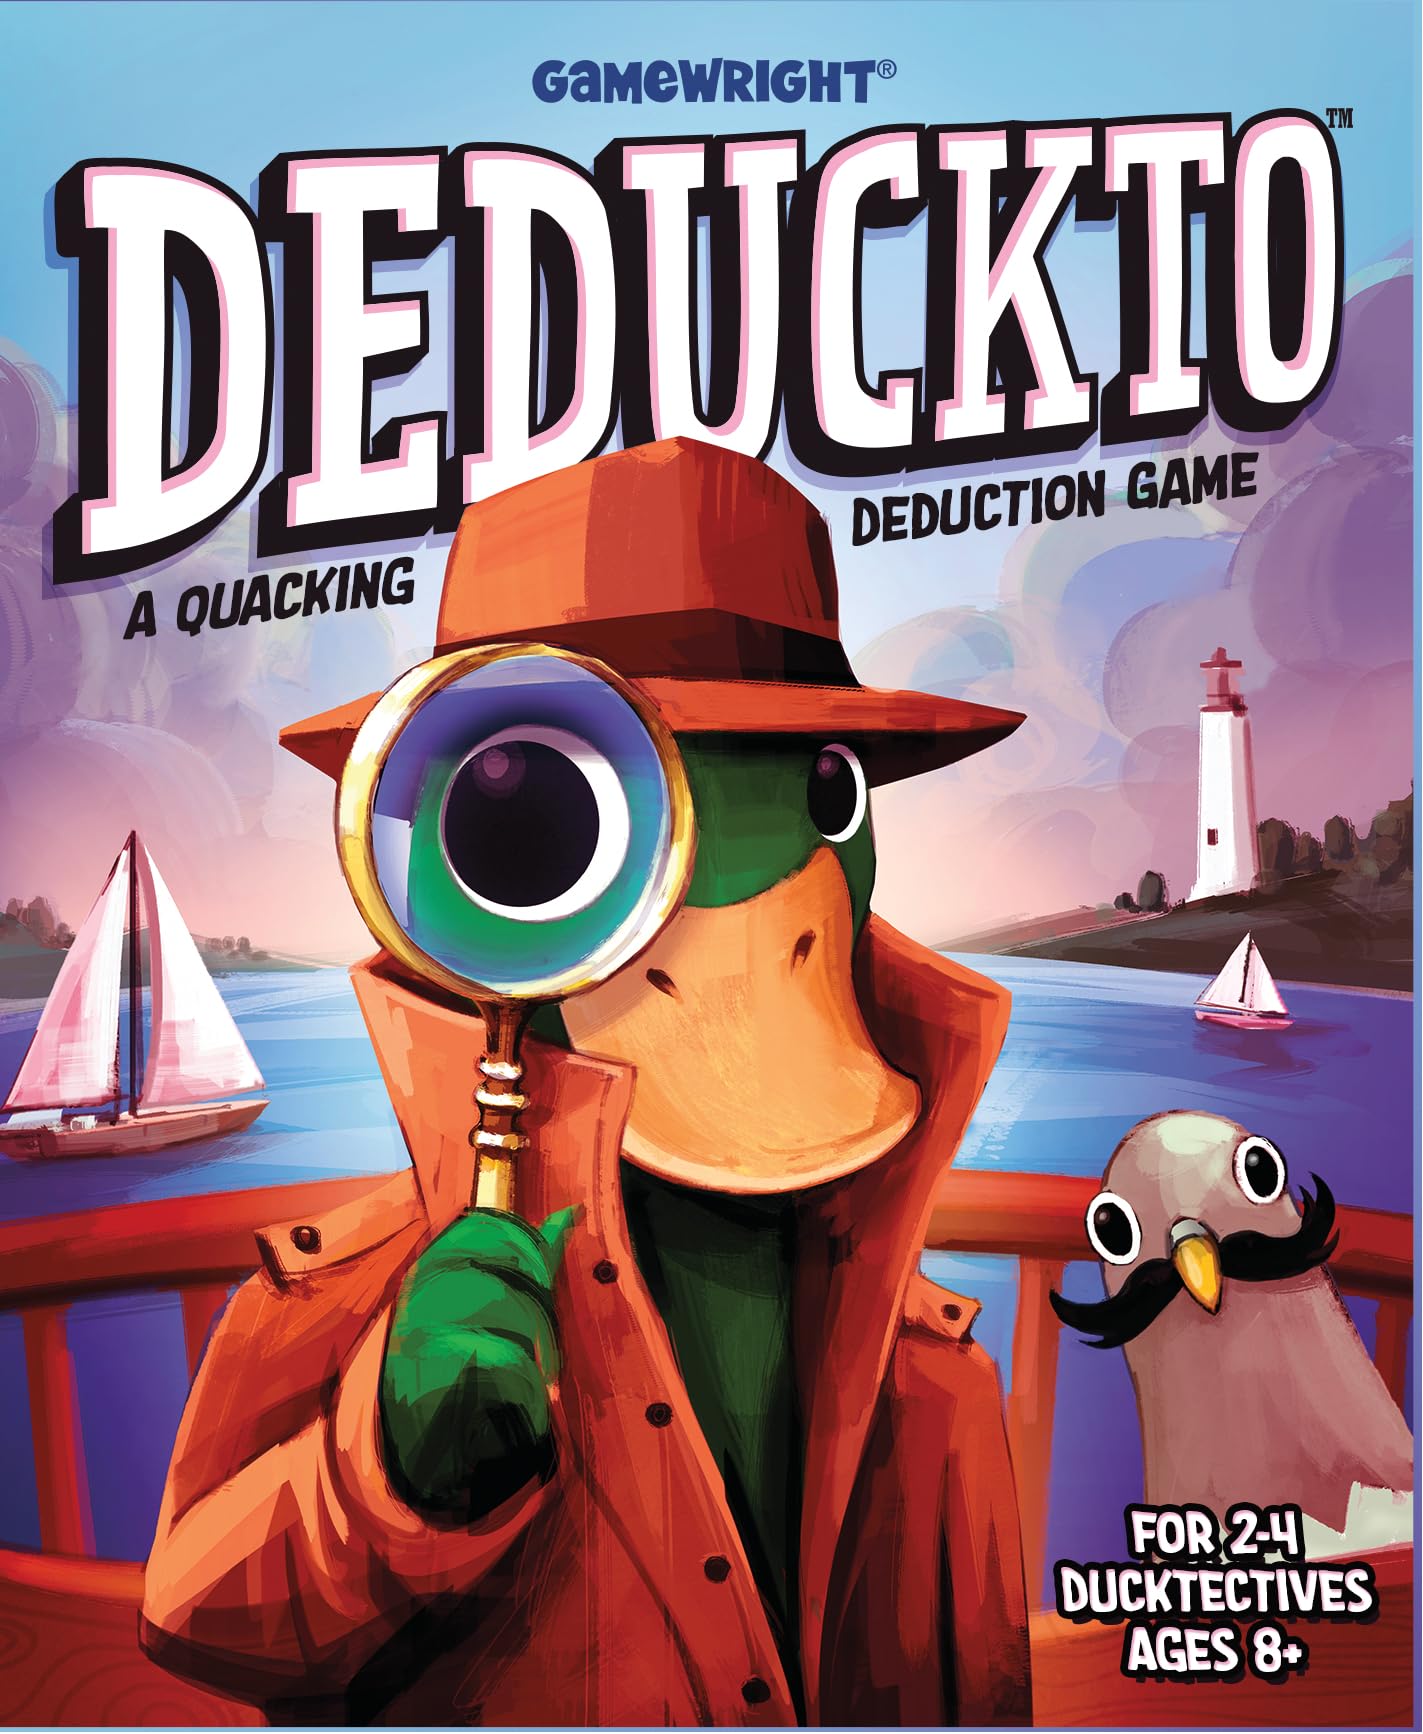 Gamewright - Deduckto - A Quackling Deduction Game - Card Game